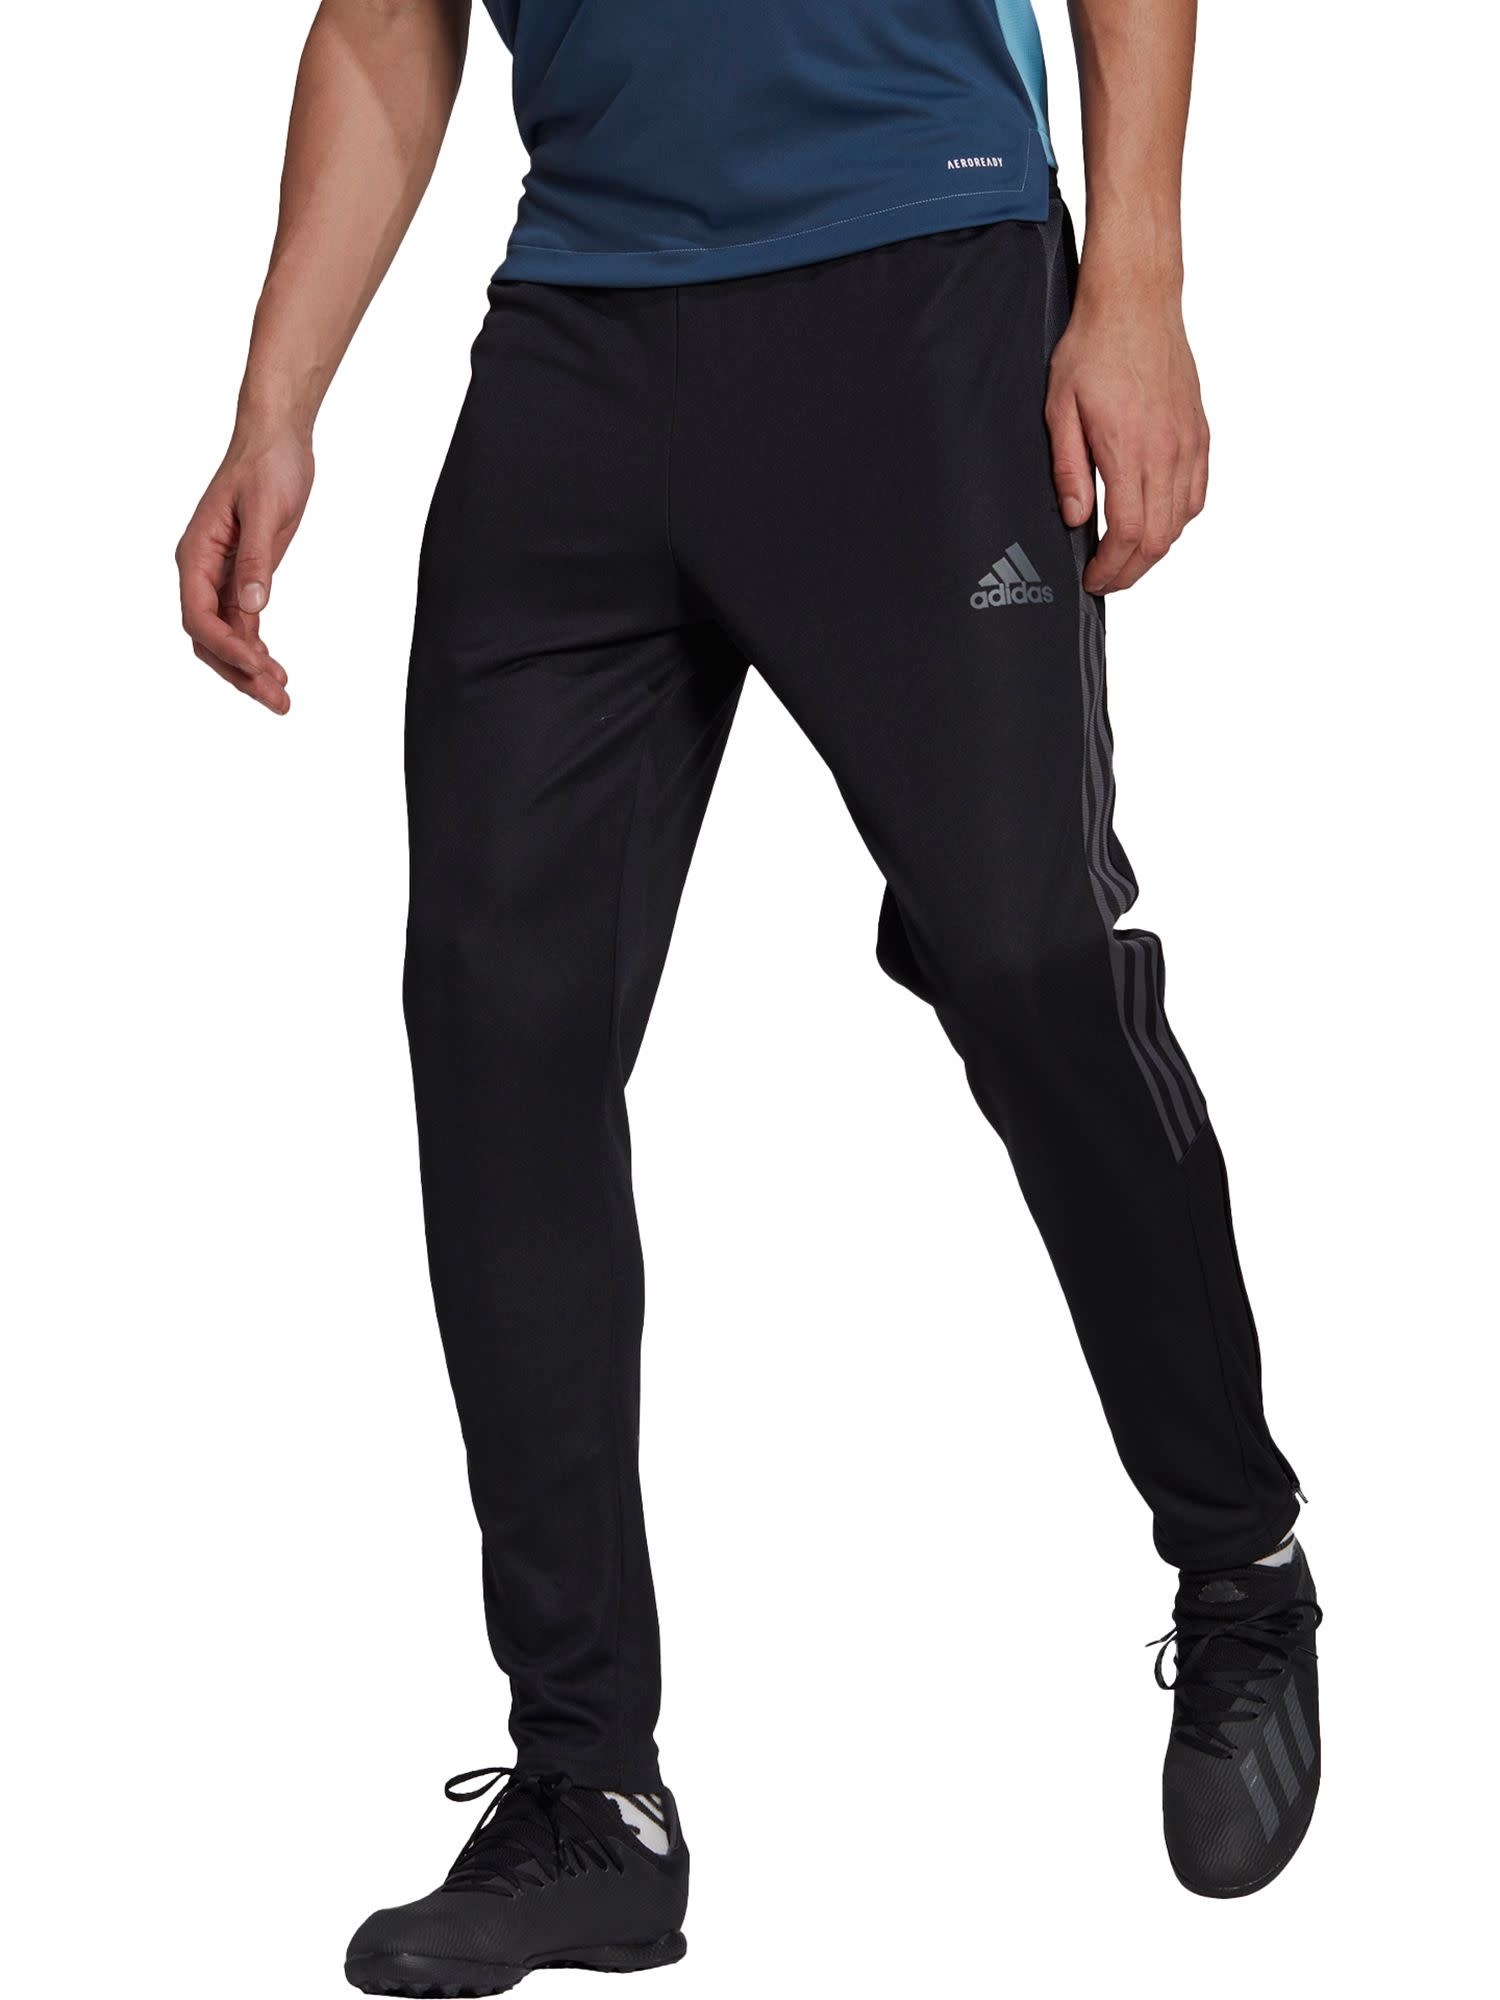 adidas adidas Tiro 21 Performance Training Pants Black/Grey - Soccerium